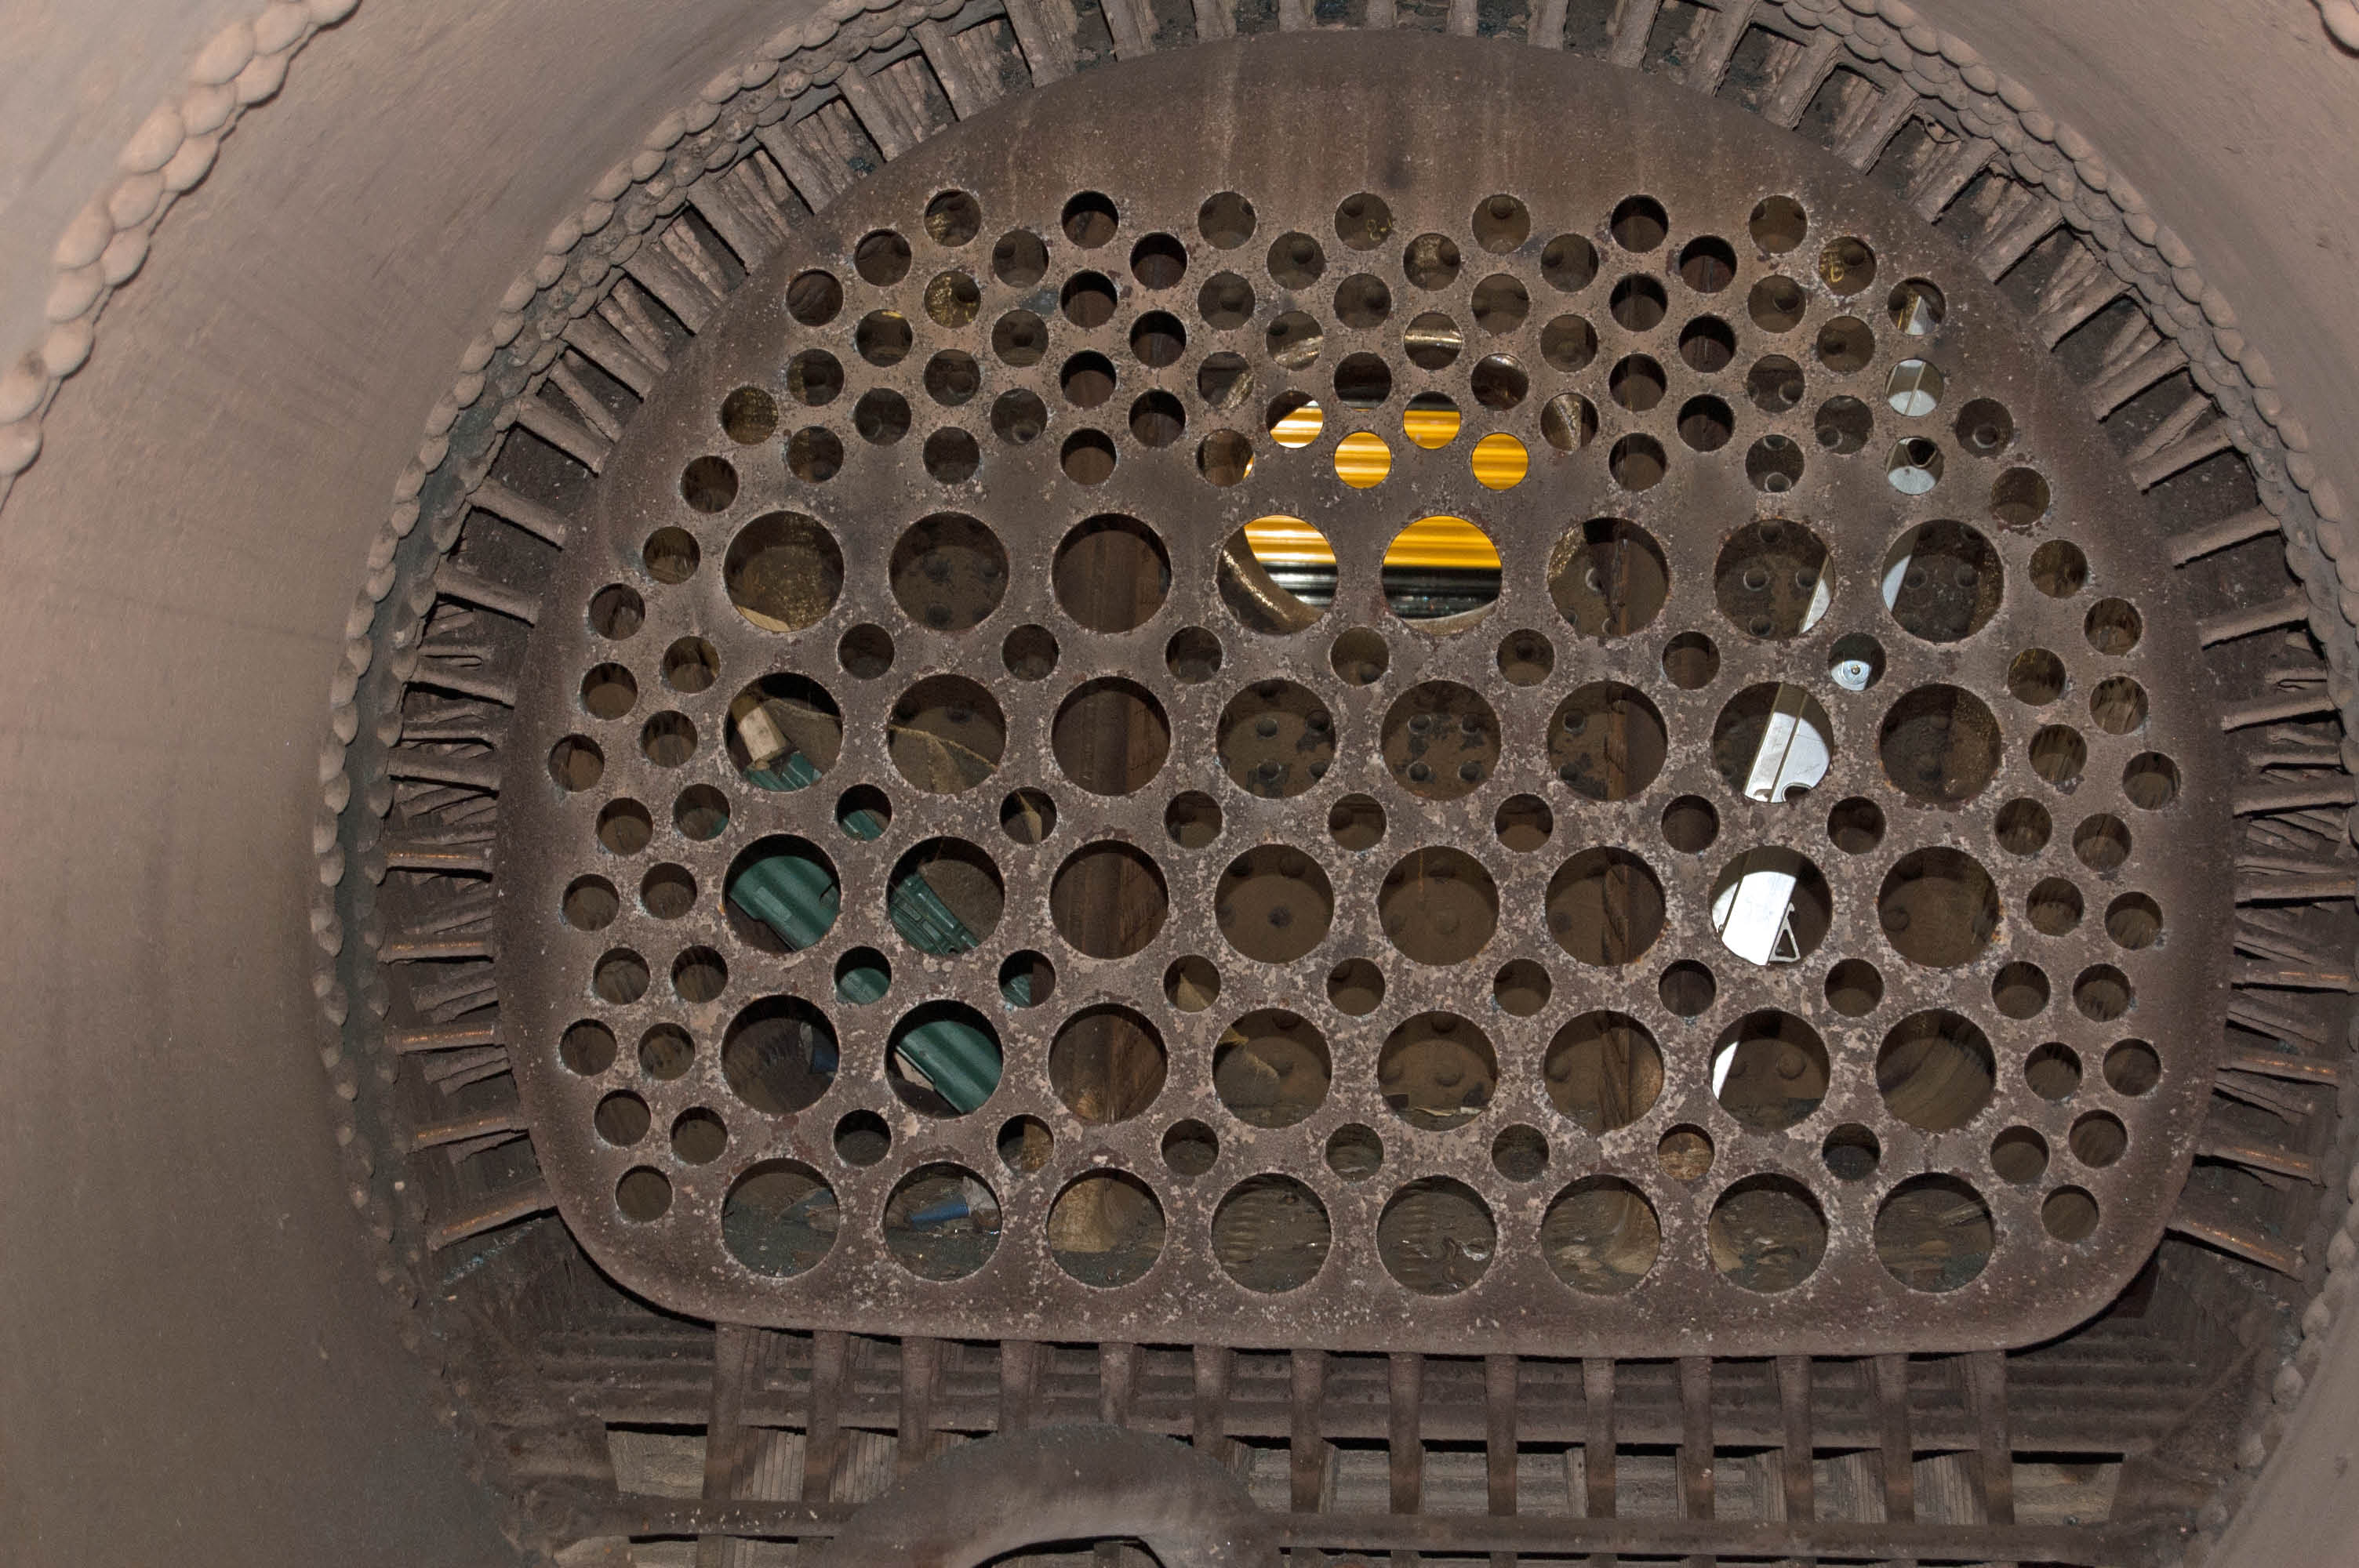 The rear tubeplate, seen from inside the boiler barrel